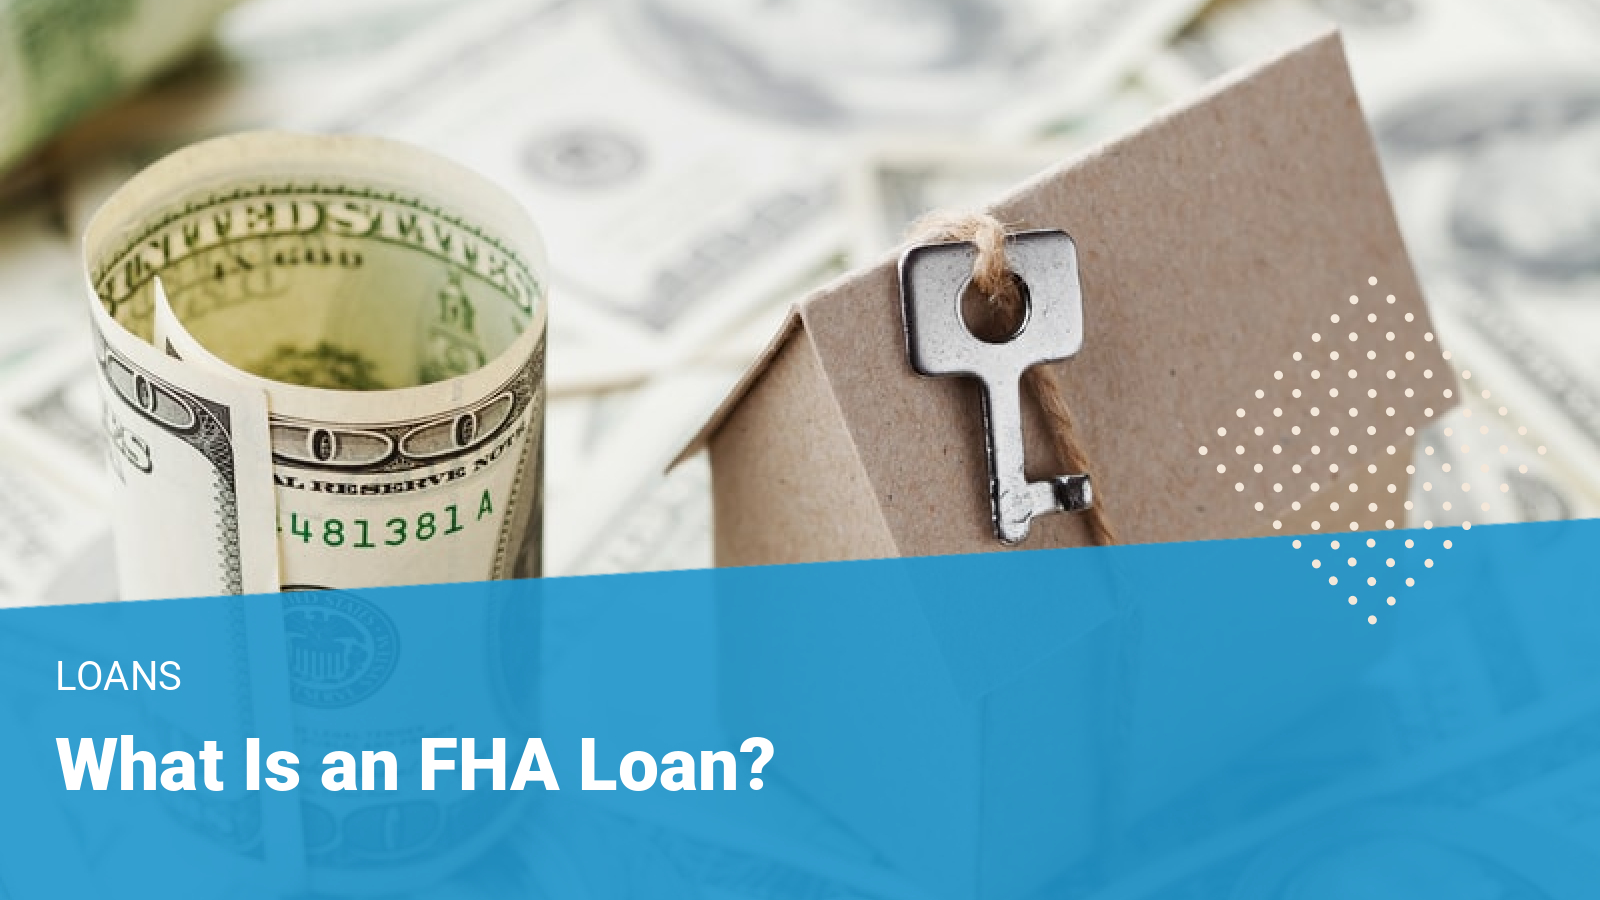 What Is an FHA Loan? FHA Loans Explained